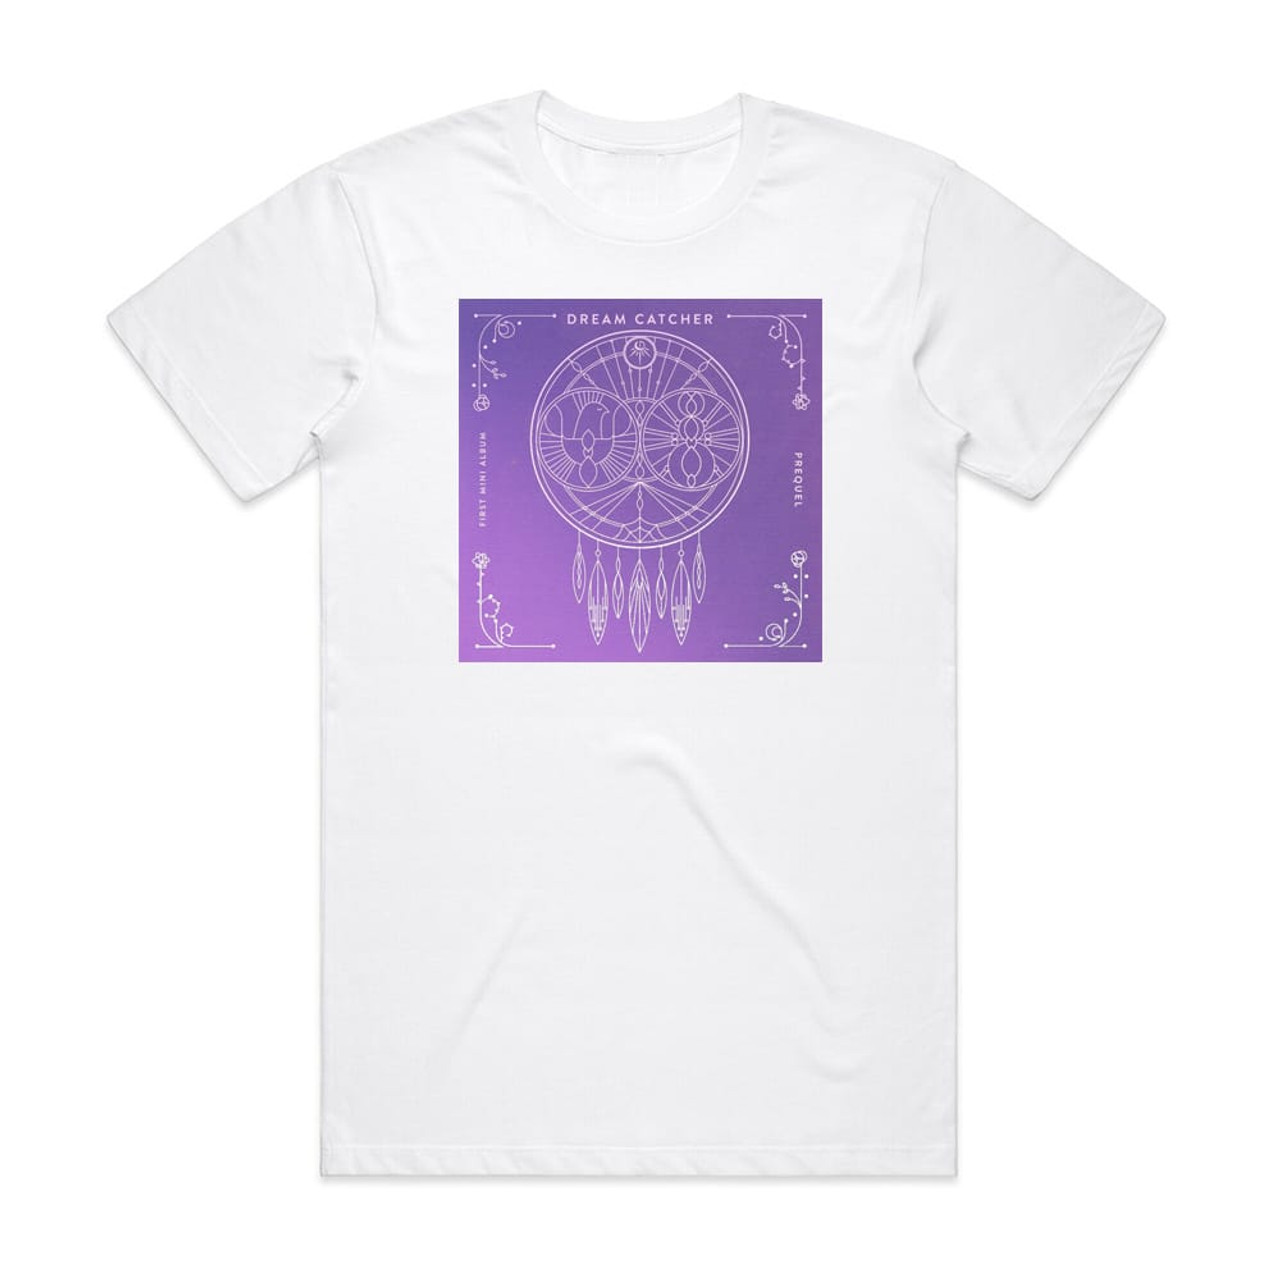 Dreamcatcher Prequel Album Cover T-Shirt White